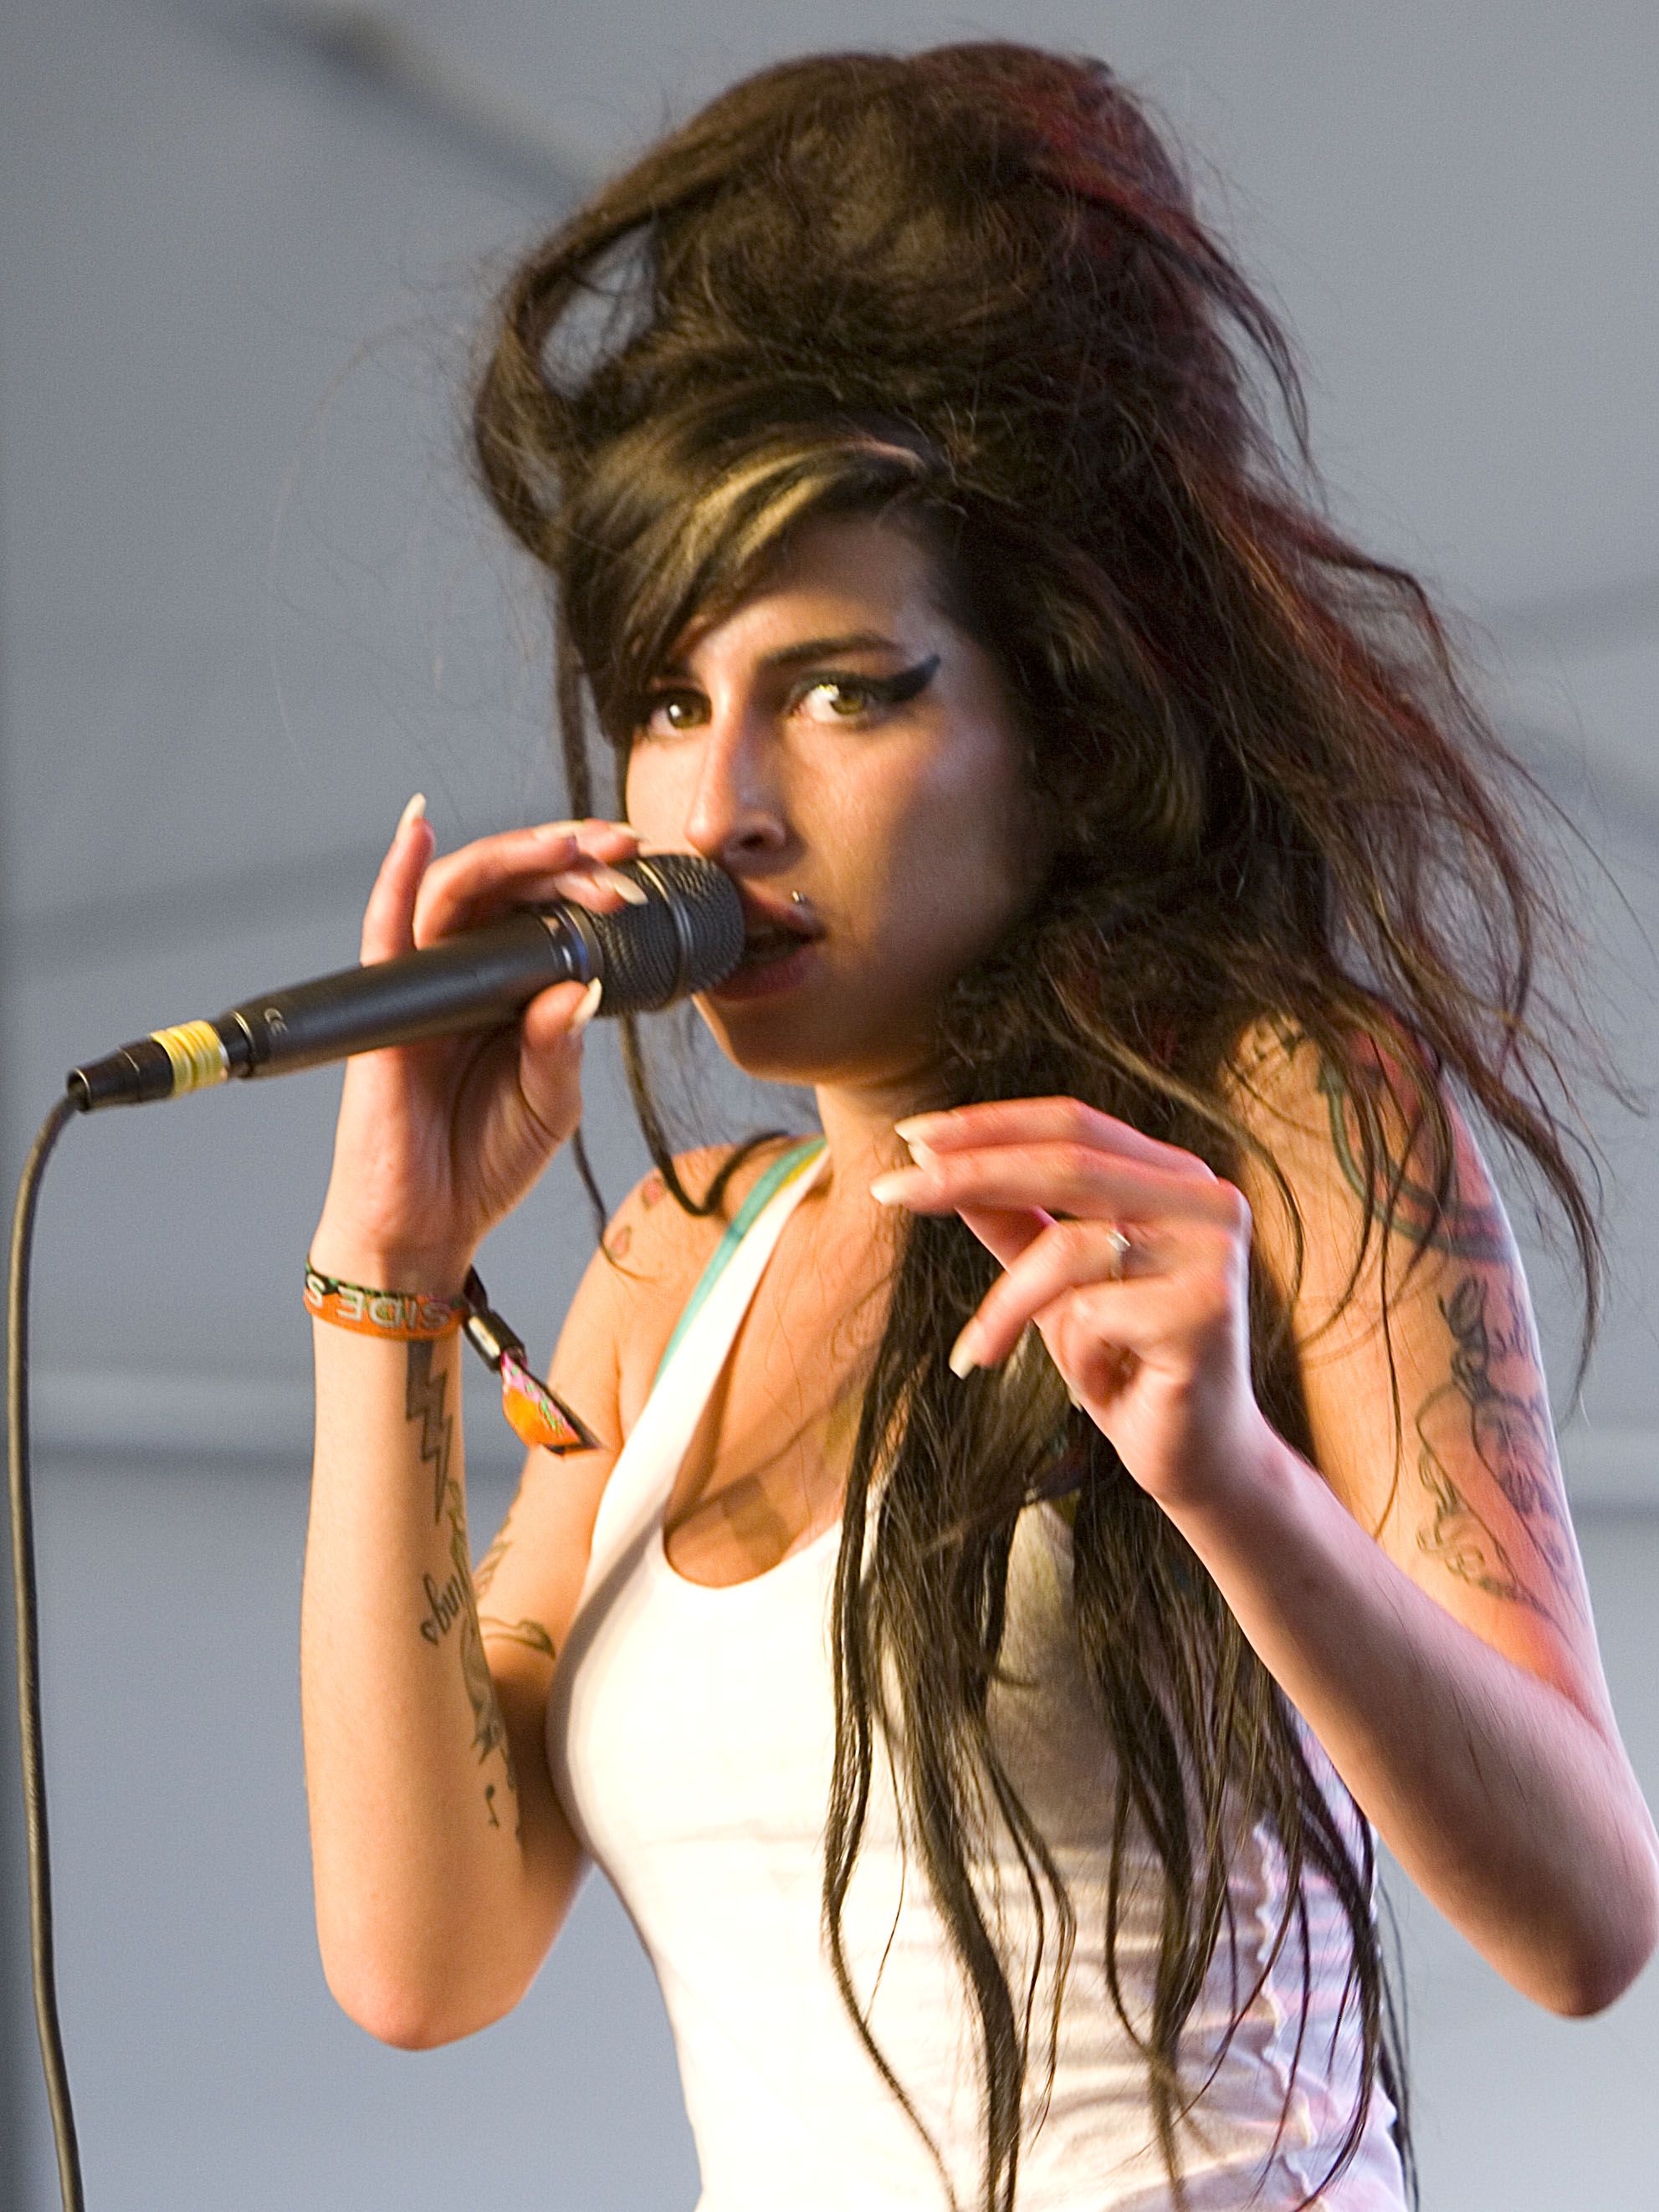 Amy Winehouse / Flickr